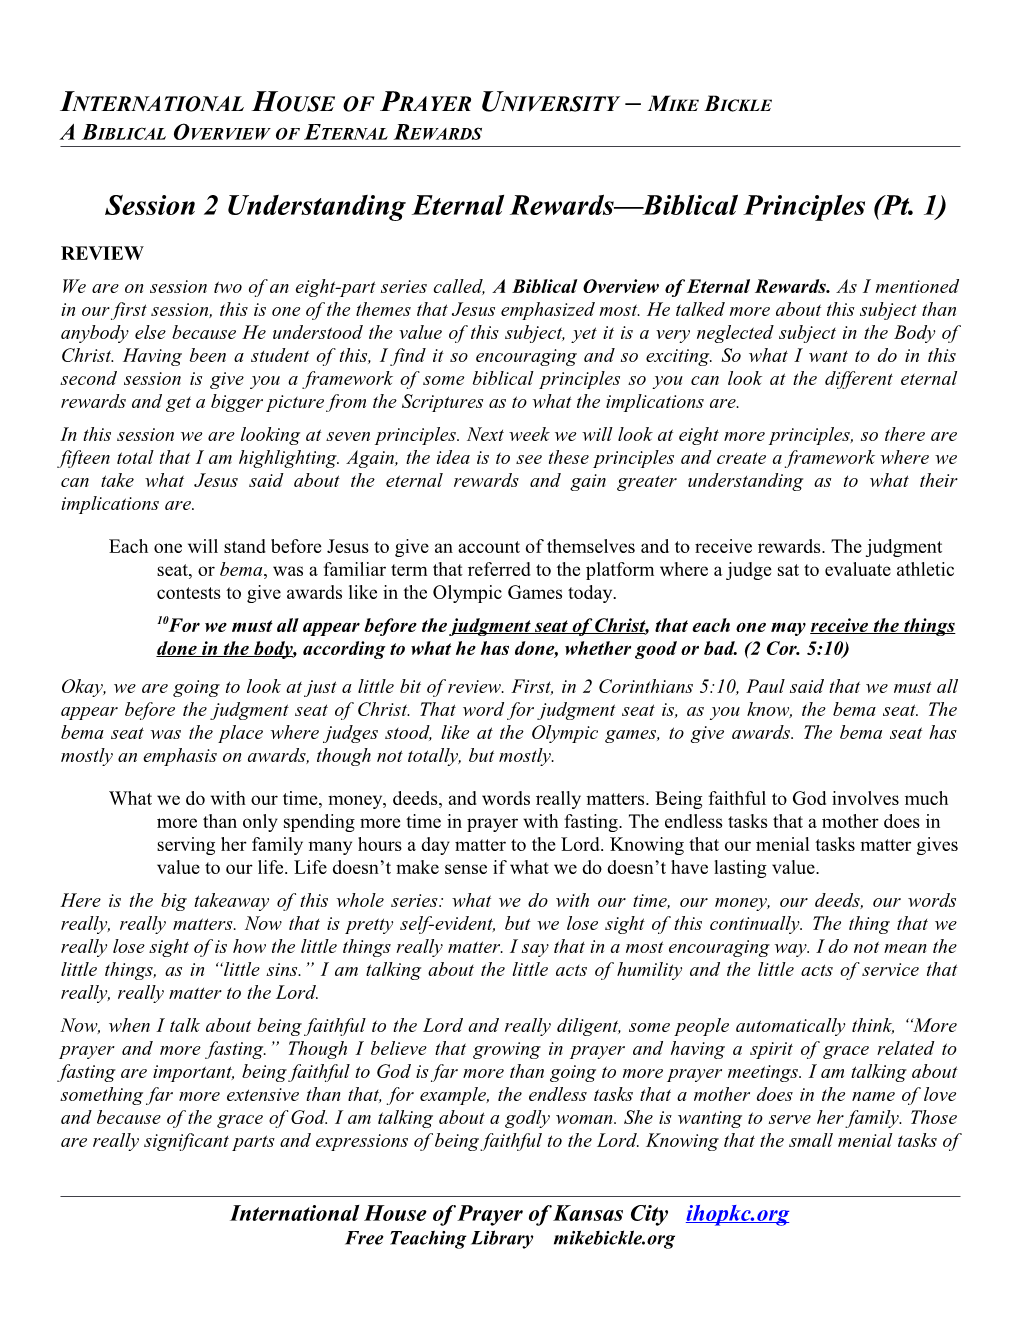 A Biblical Overview of Eternal Rewards Mike Bickle Session 2 Understanding Eternal Rewards